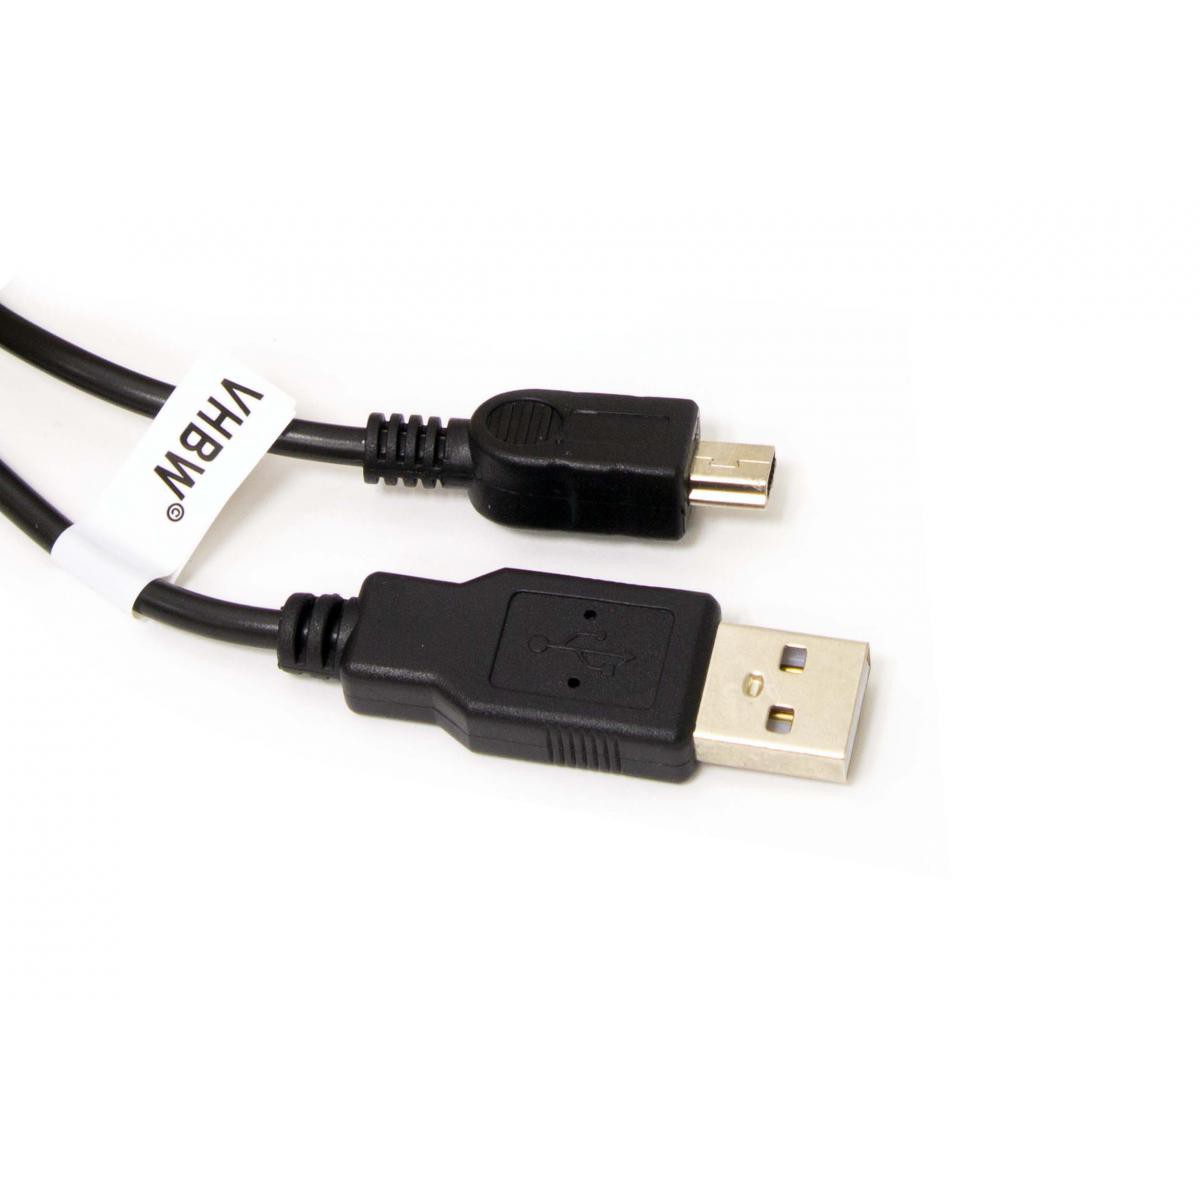 Vhbw - Câble USB A-Mini-B 5 pôles noir/black, longueur 1m, pour Aiptek AHD AF1, AHD H12 Extreme, AHD H23, Aiptek AHD H350, AHD H500, JVC GC-WP10 - Câble antenne